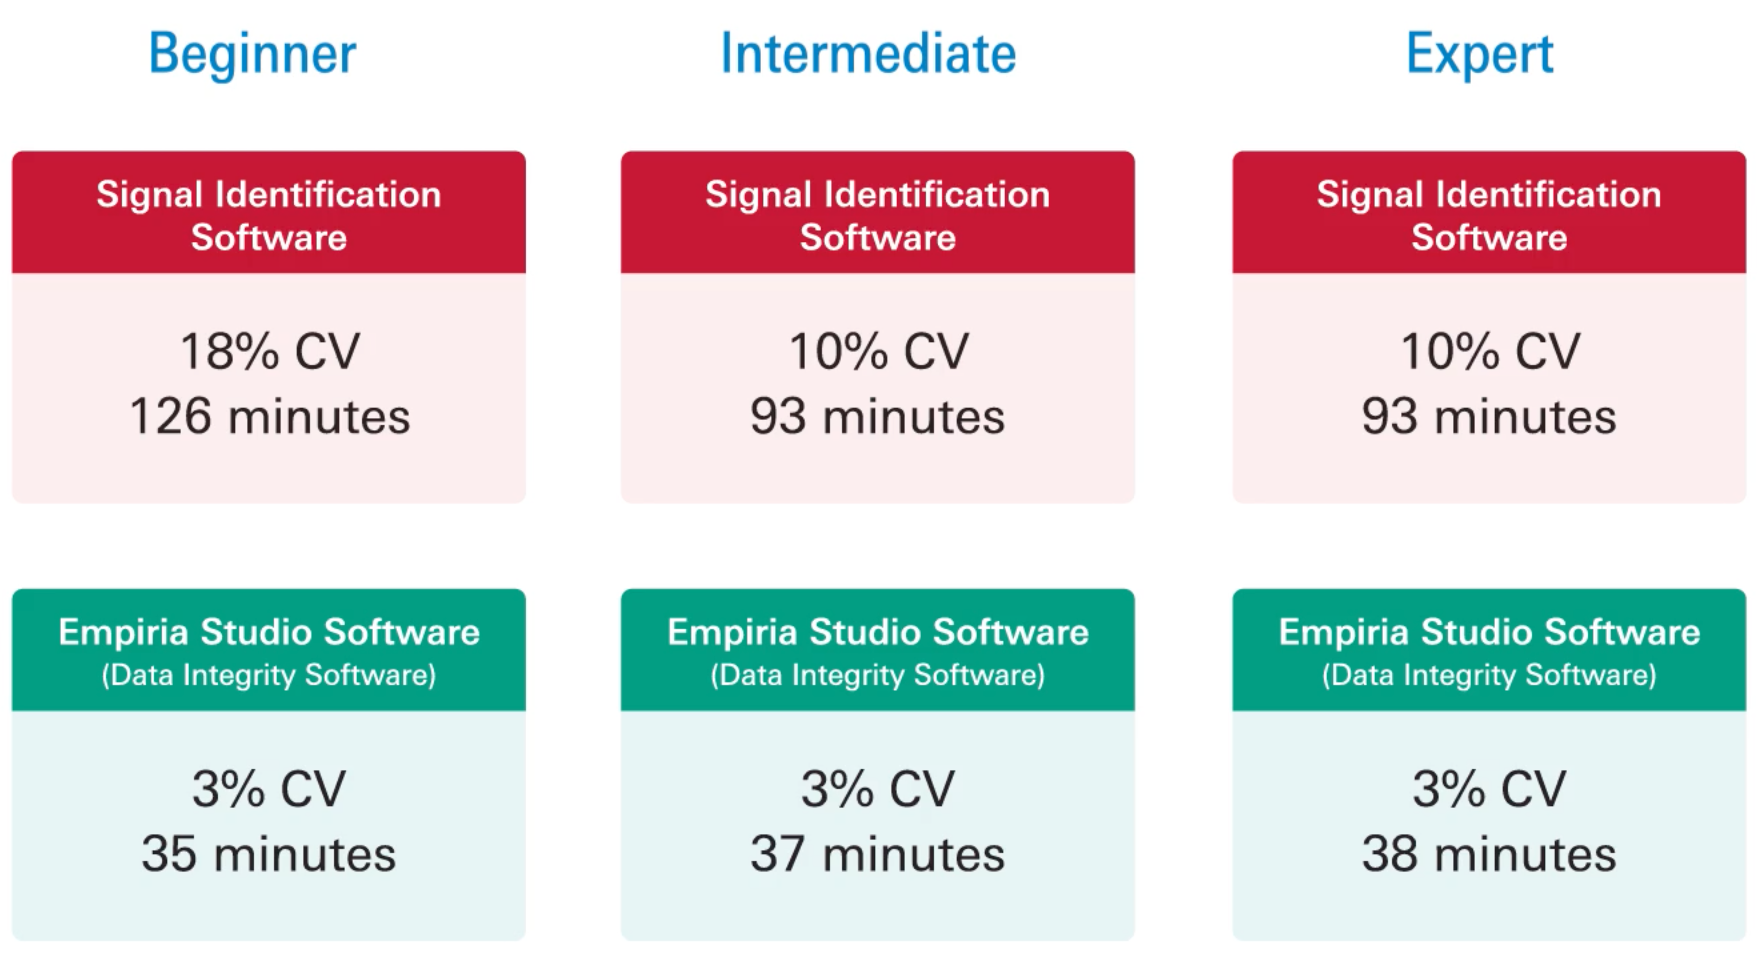 Employee results for signal identification software: Beginner: 18% CV, 126 min; Intermediate: 10% CV, 93 min; Expert: 10% CV, 93 minutes. Employee results for Empiria Studio Software: Beginner: 3% CV, 35 min; Intermediate: 3% CV, 37 minutes; Expert: 3% CV, 38 minutes.